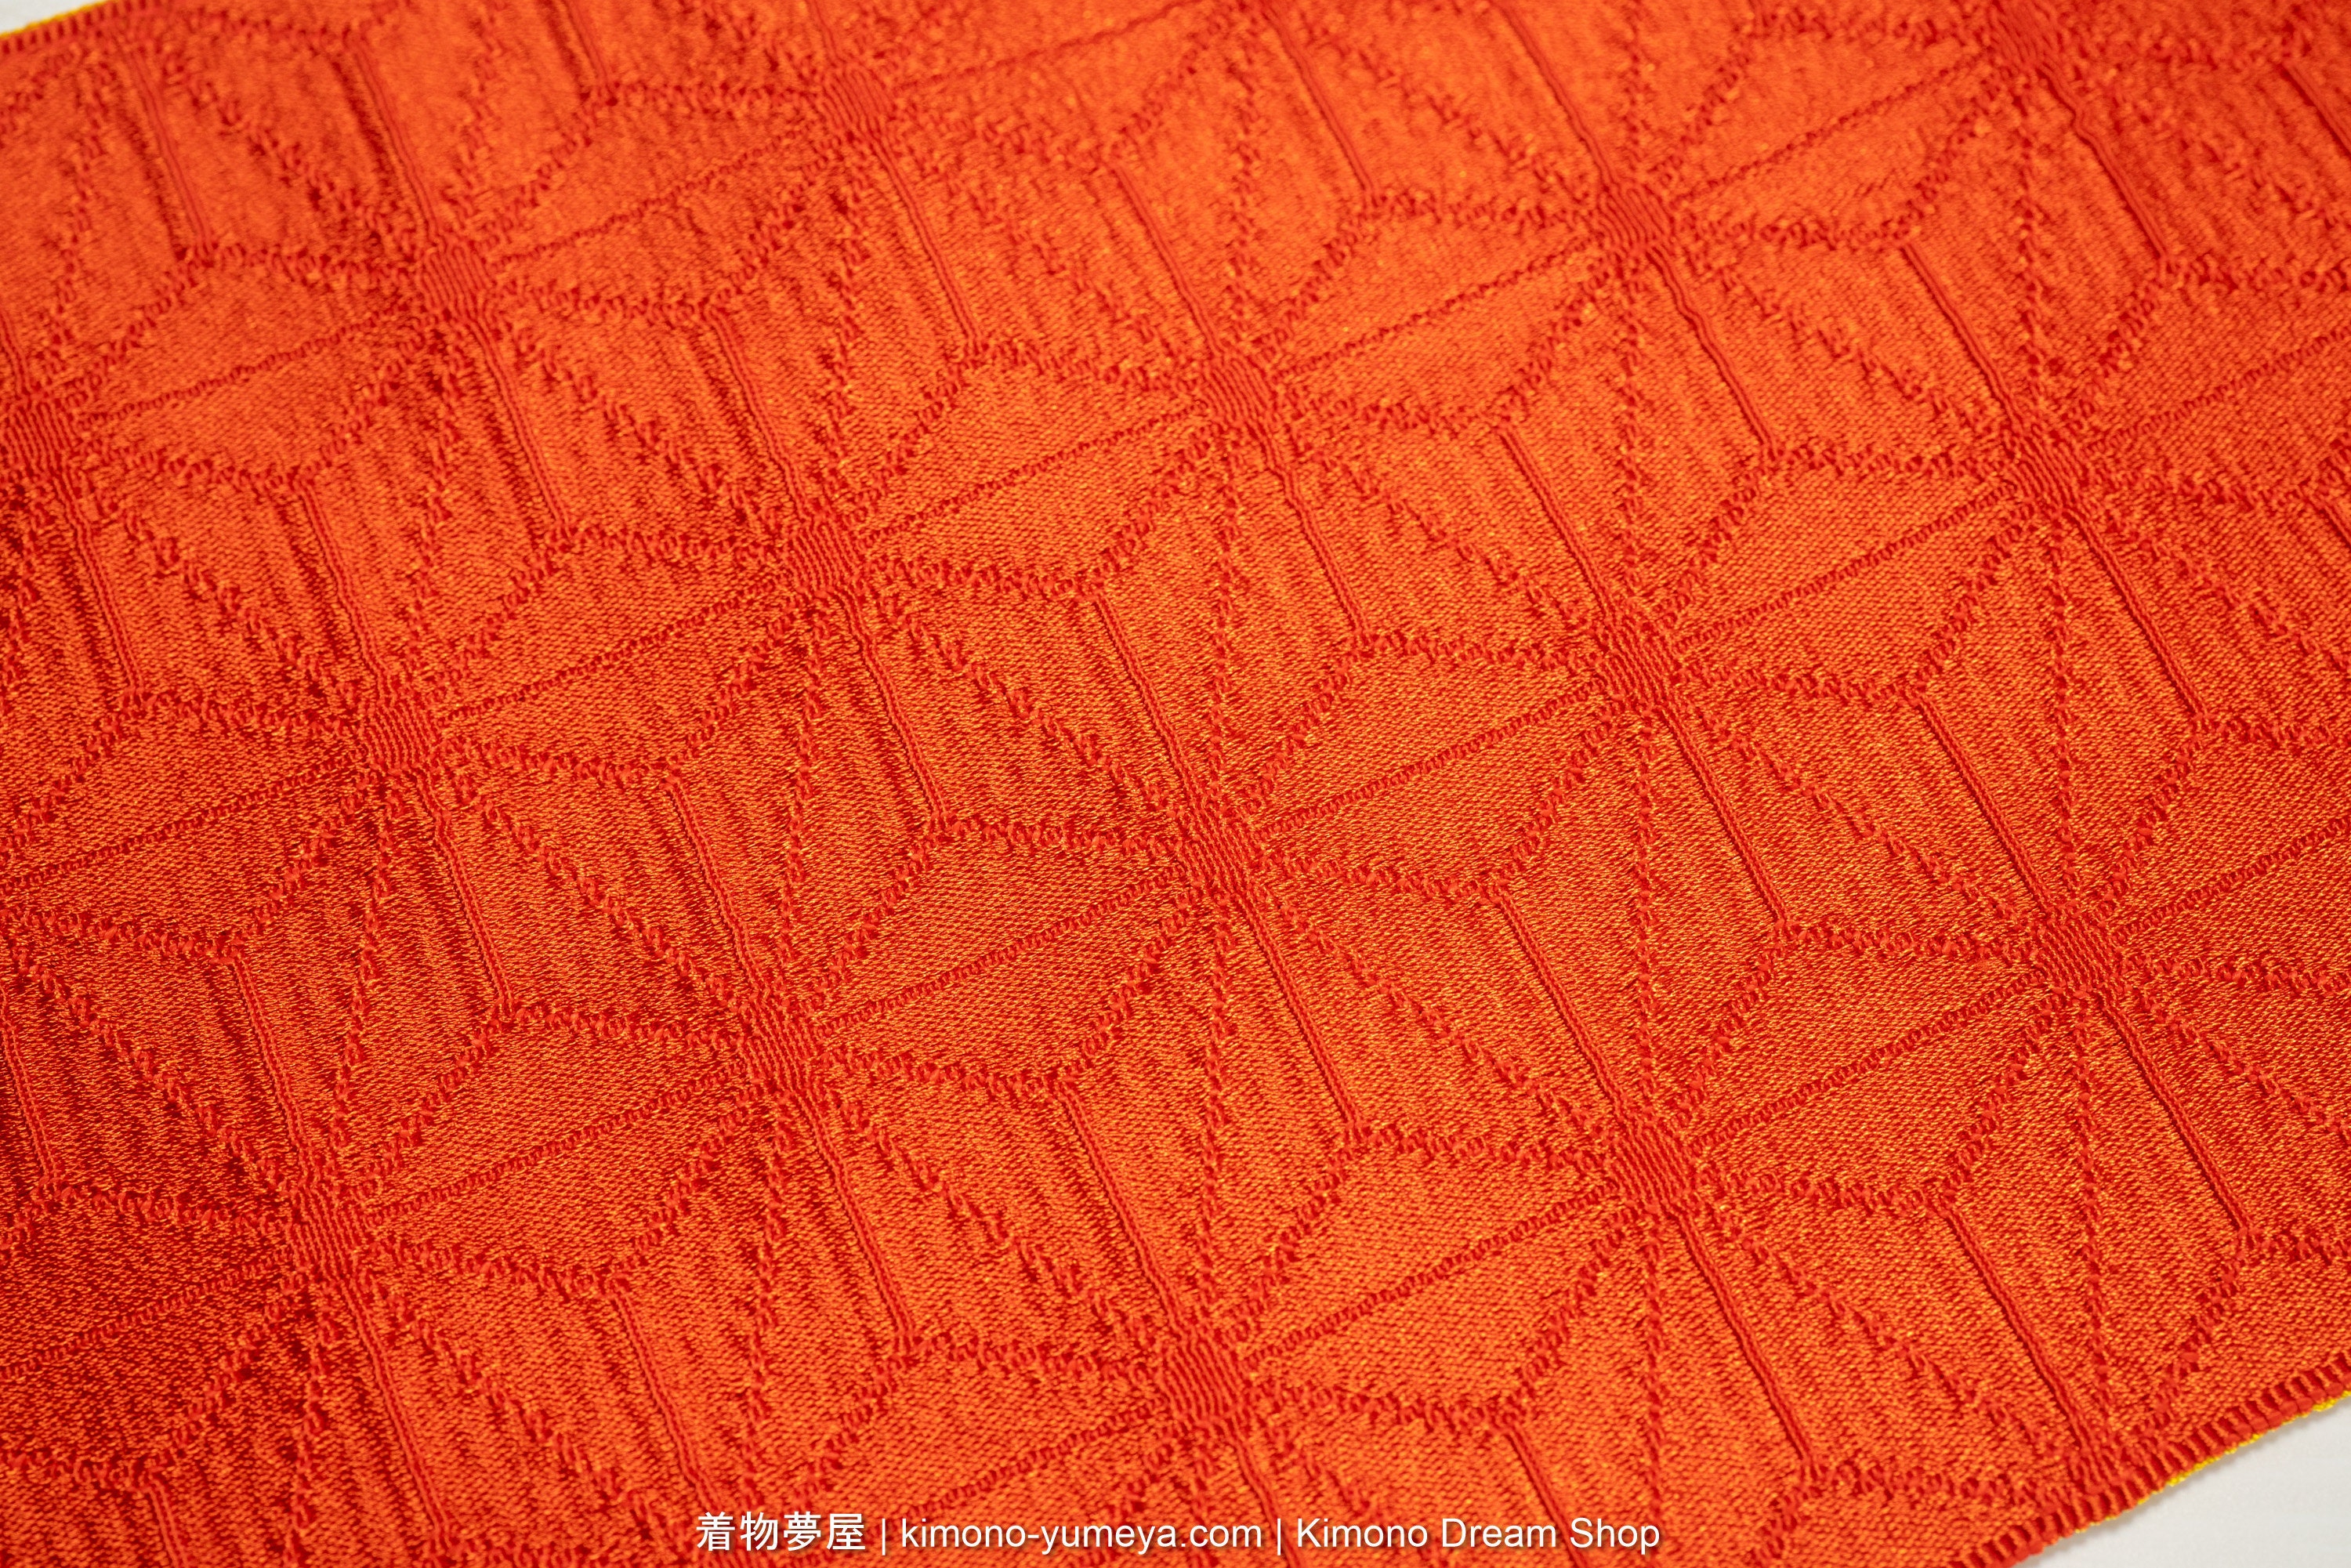 Solid color (iromuji) orange hemp leaf pattern.